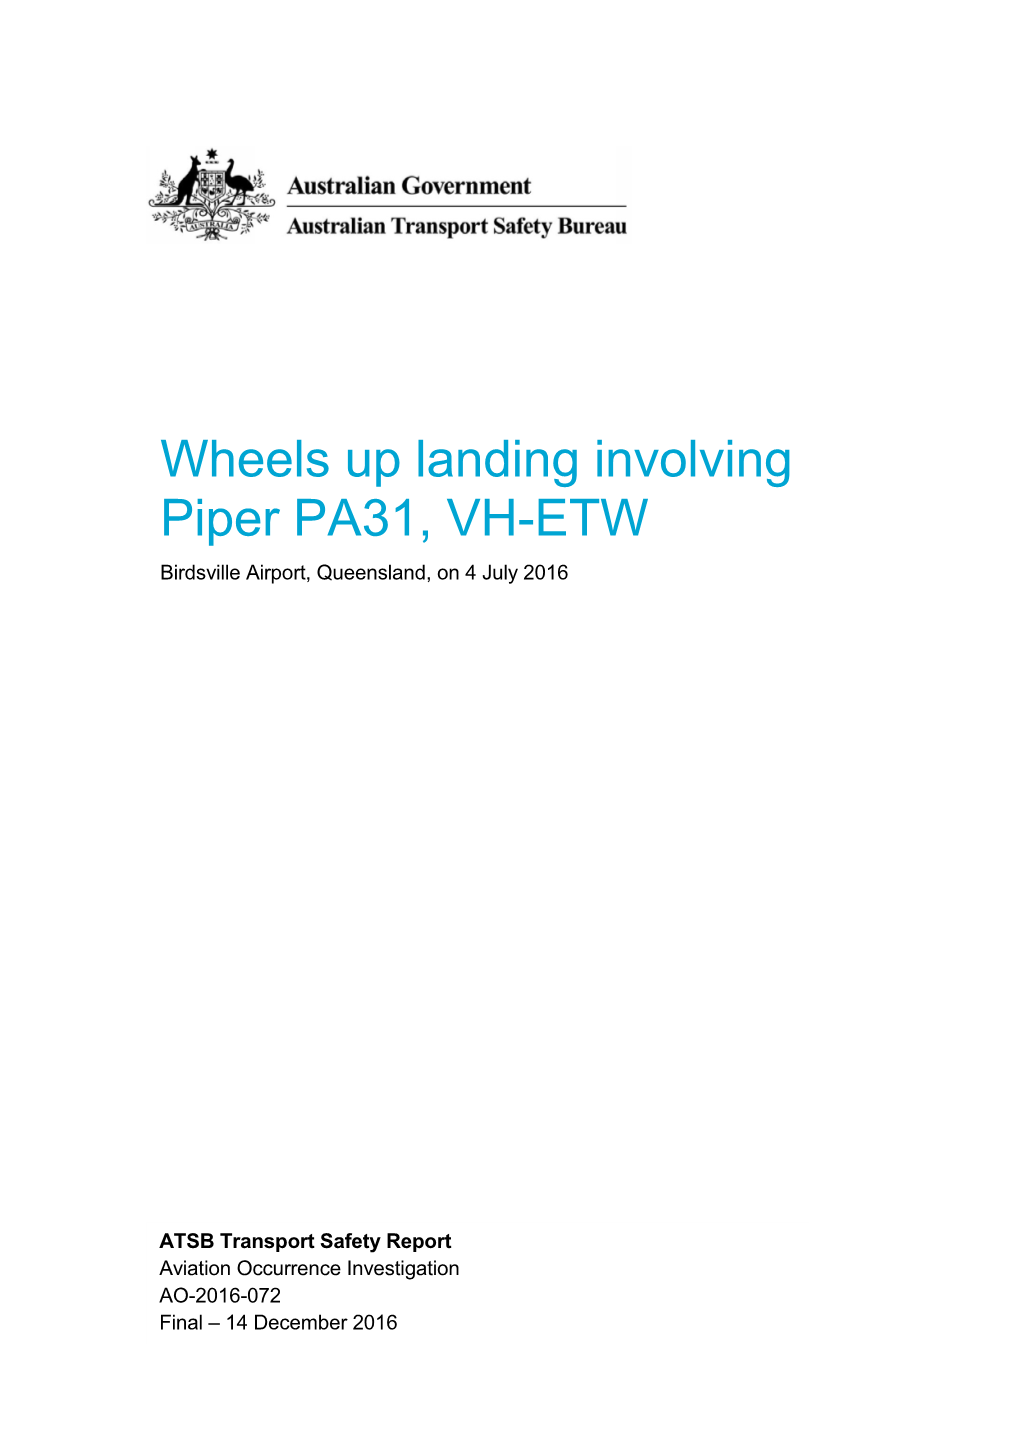 Wheels up Landing Involving Piper PA31, VH-ETW, Birdsville Airport